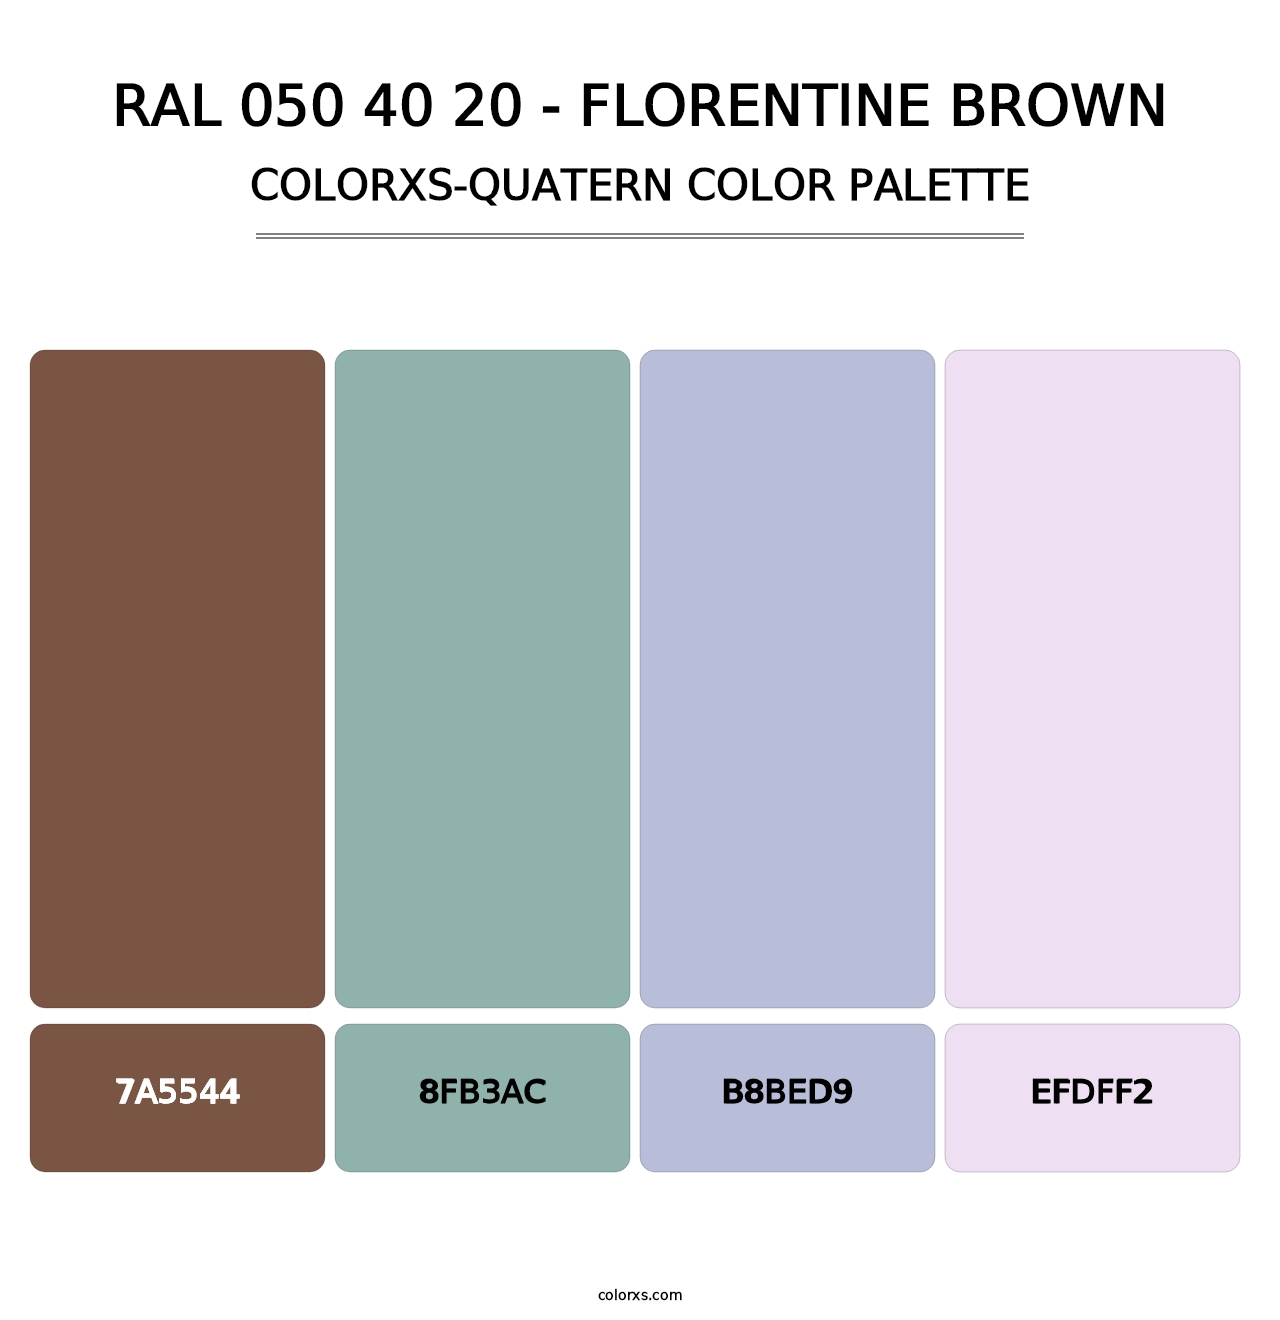 RAL 050 40 20 - Florentine Brown - Colorxs Quatern Palette